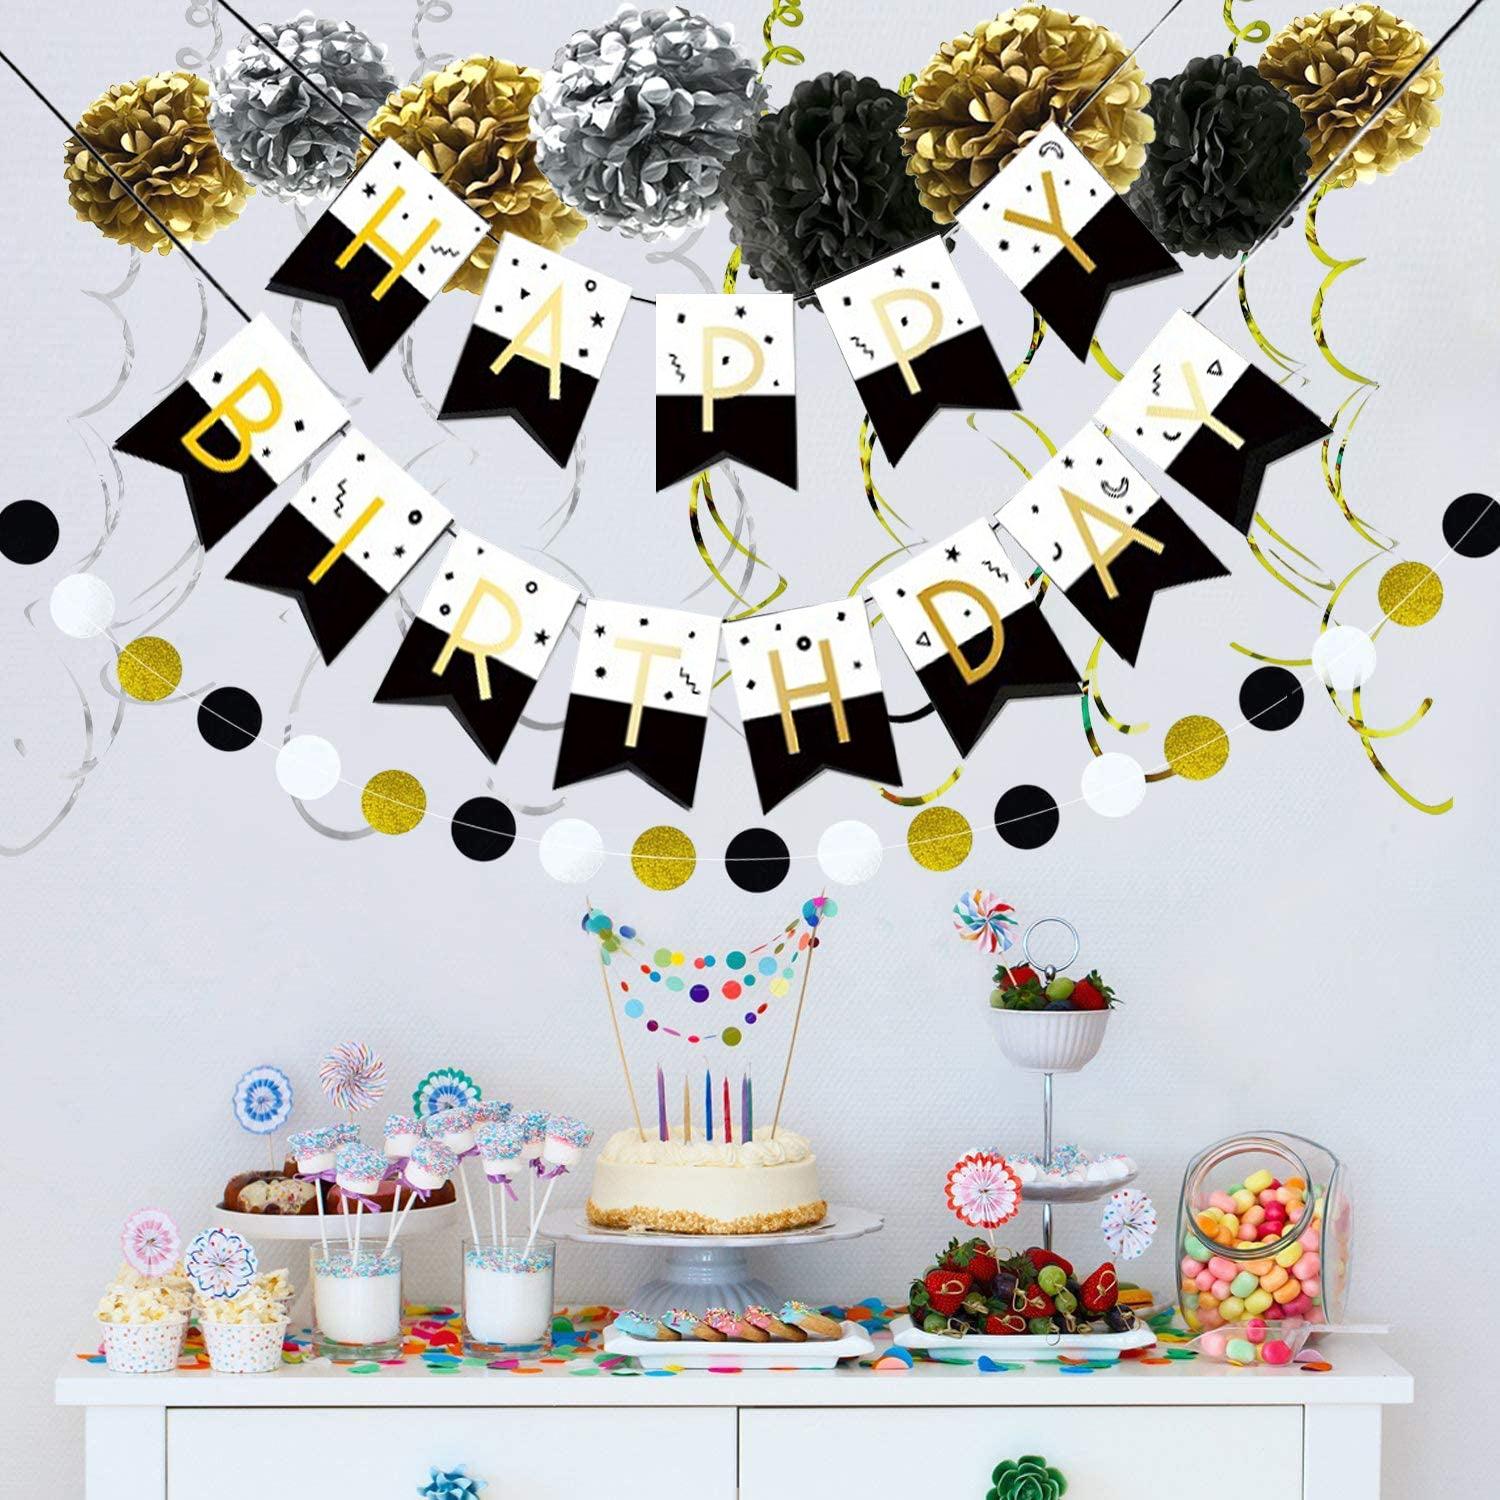 Happy Birthday Banner Kit - Happy Birthday Decorations - 1 Bday Banner, 9 Swirls, 8 Pom Poms Flowers, 1 Dots Garland - Birthday Party Decorations - If you say i do